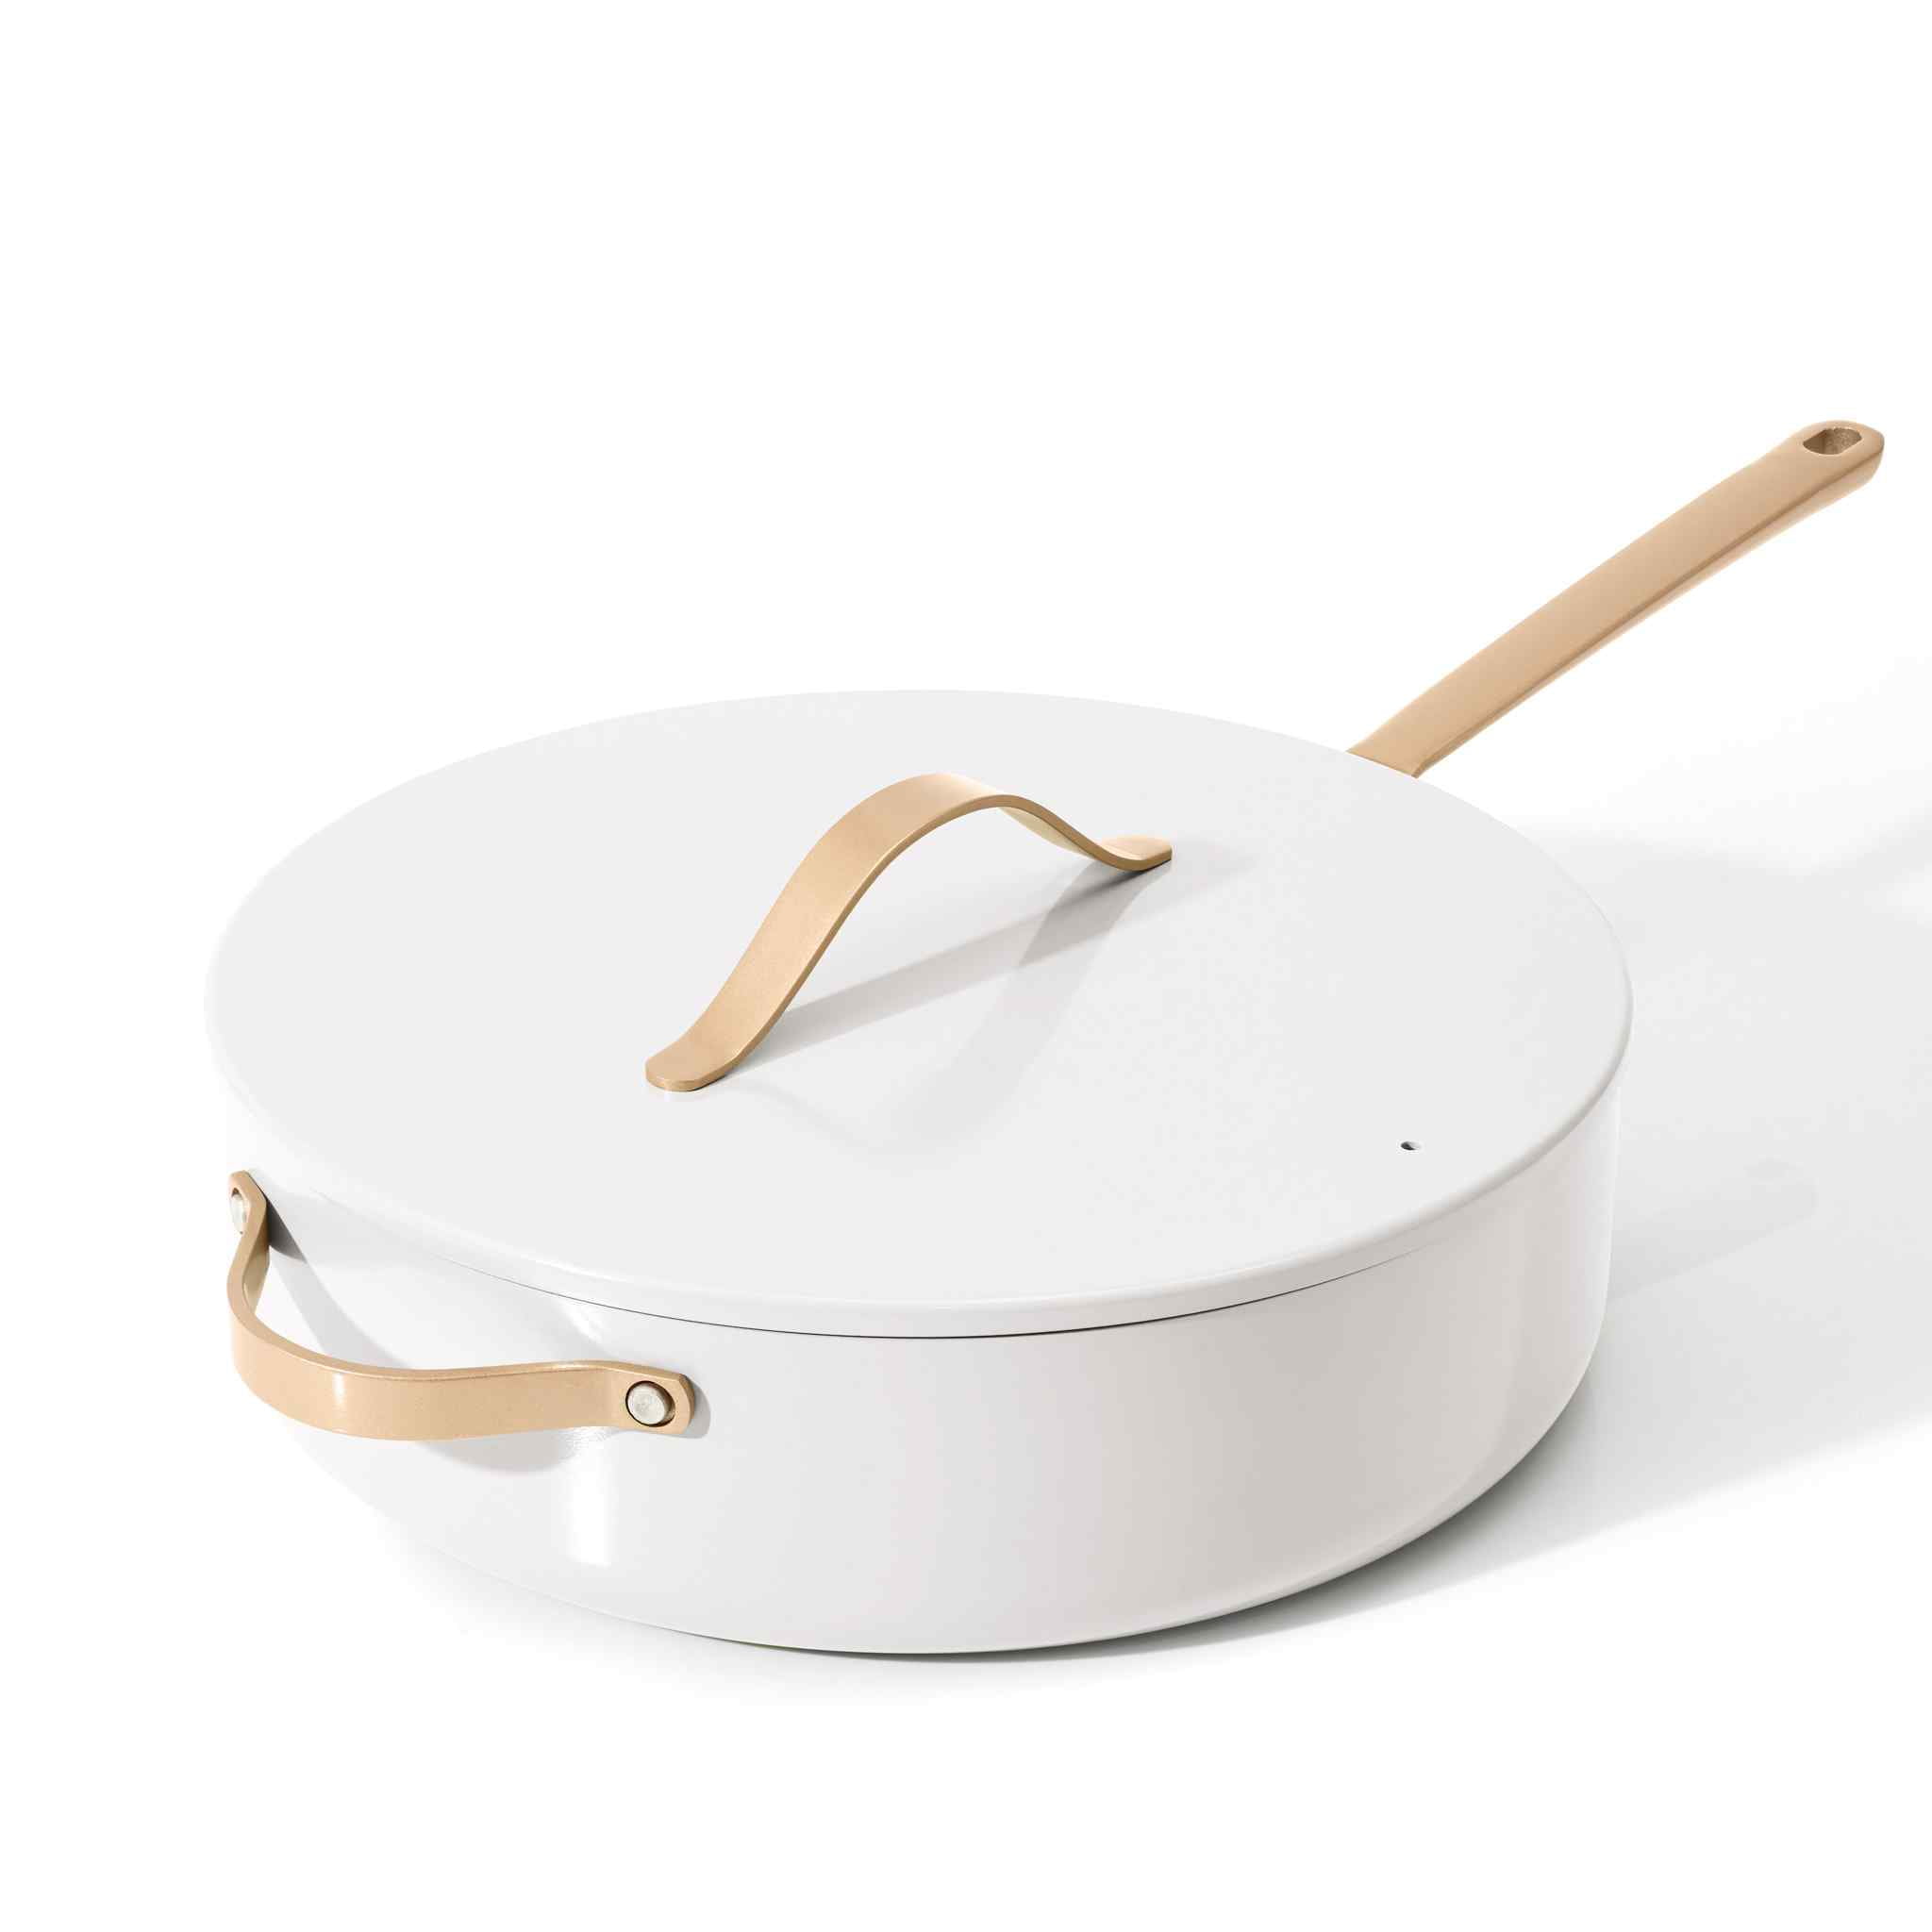 Beautiful 5.5 Quart Ceramic Non-Stick Saute Pan, White Icing, by Drew Barrymore